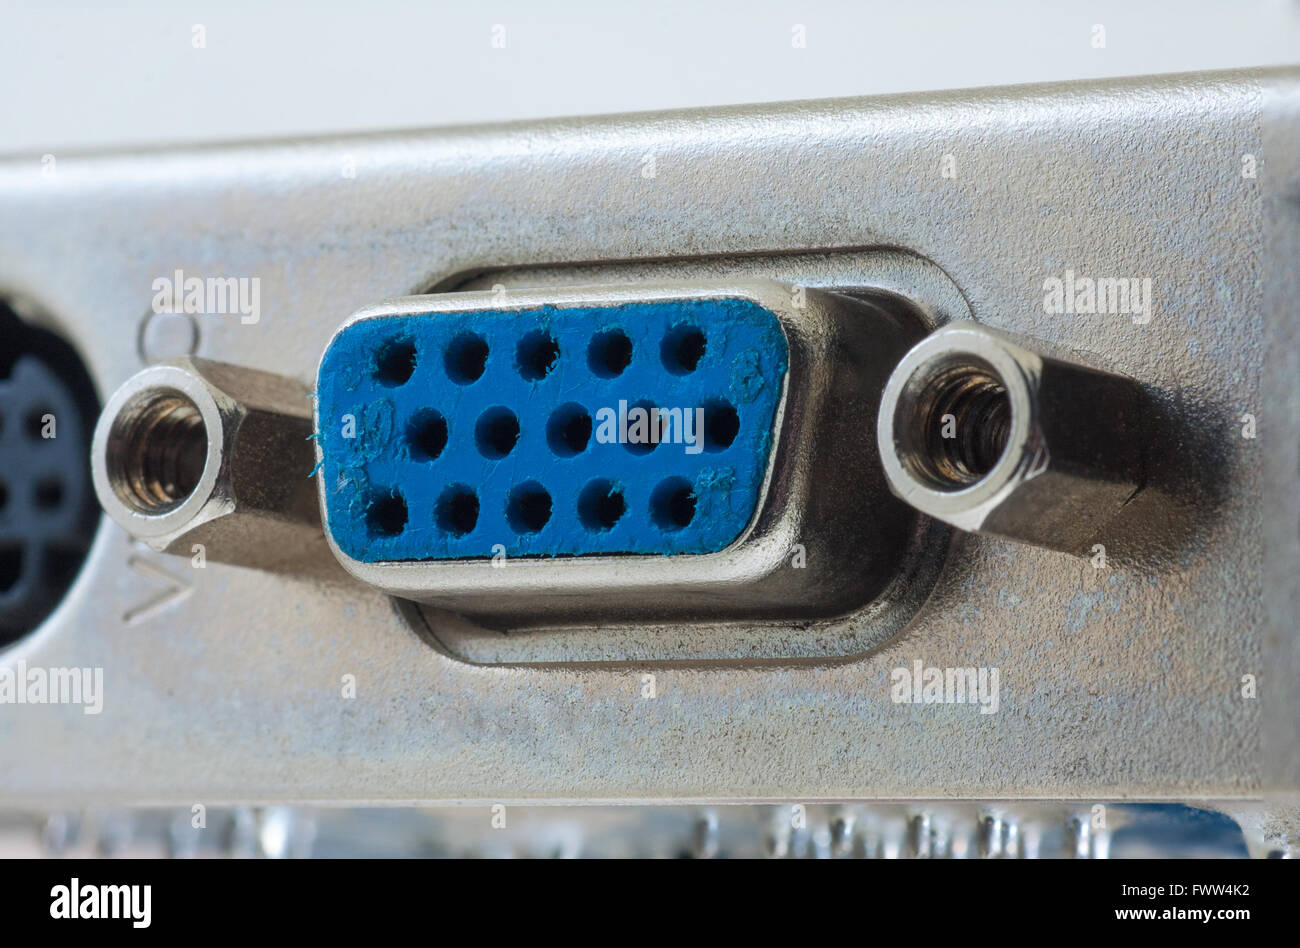 PC Mainboard Connector of VGA video port, closeup Stock Photo